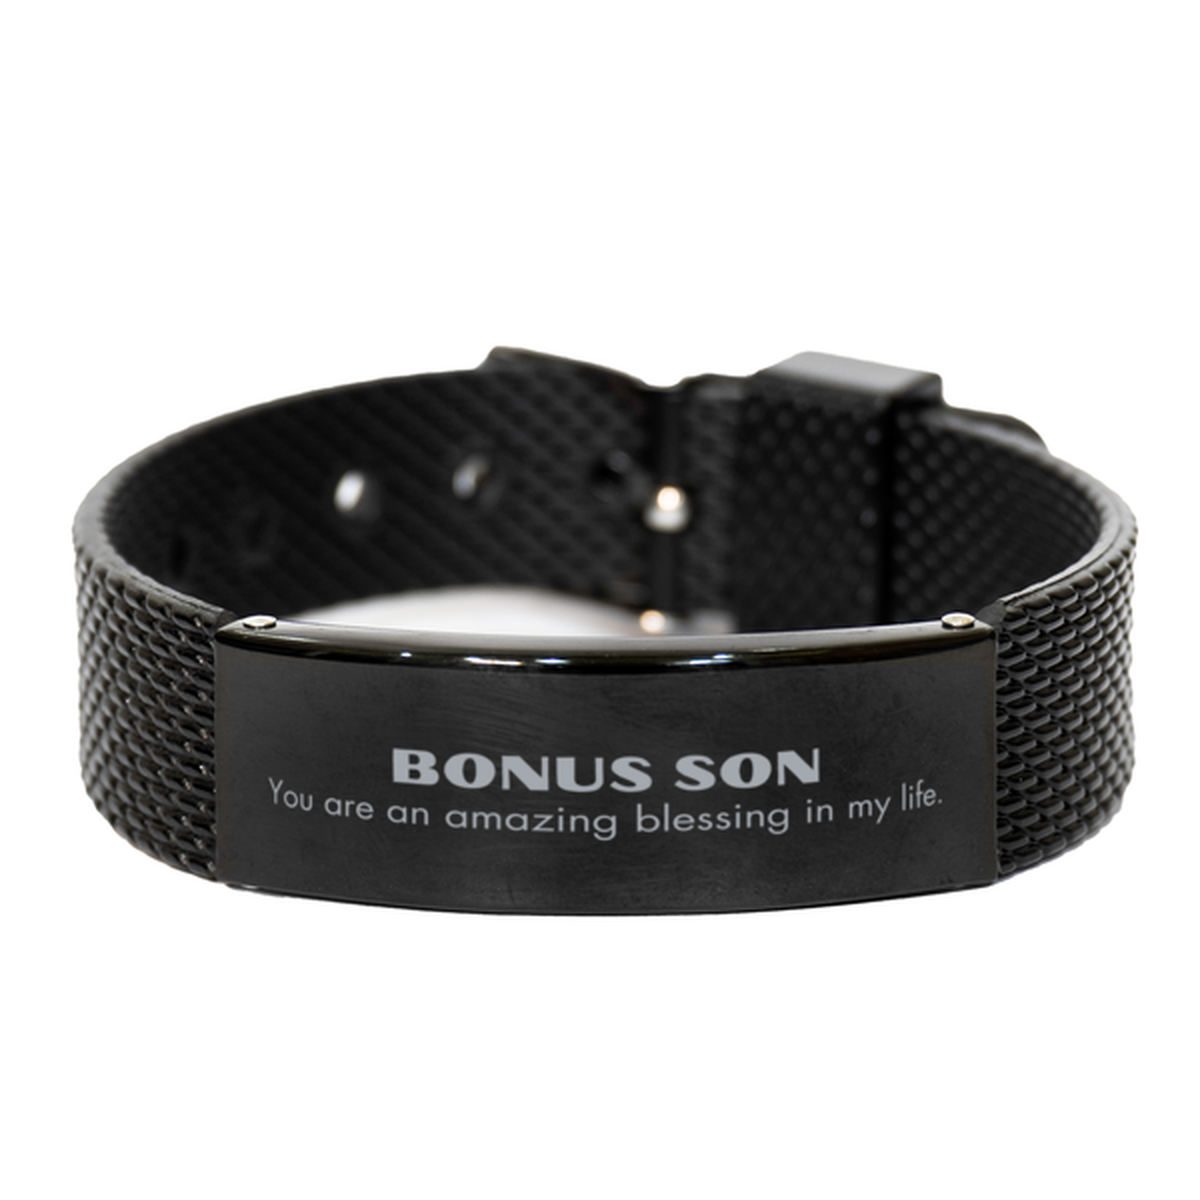 Bonus Son Black Shark Mesh Bracelet, You are an amazing blessing in my life, Thank You Gifts For Bonus Son, Inspirational Birthday Christmas Unique Gifts For Bonus Son